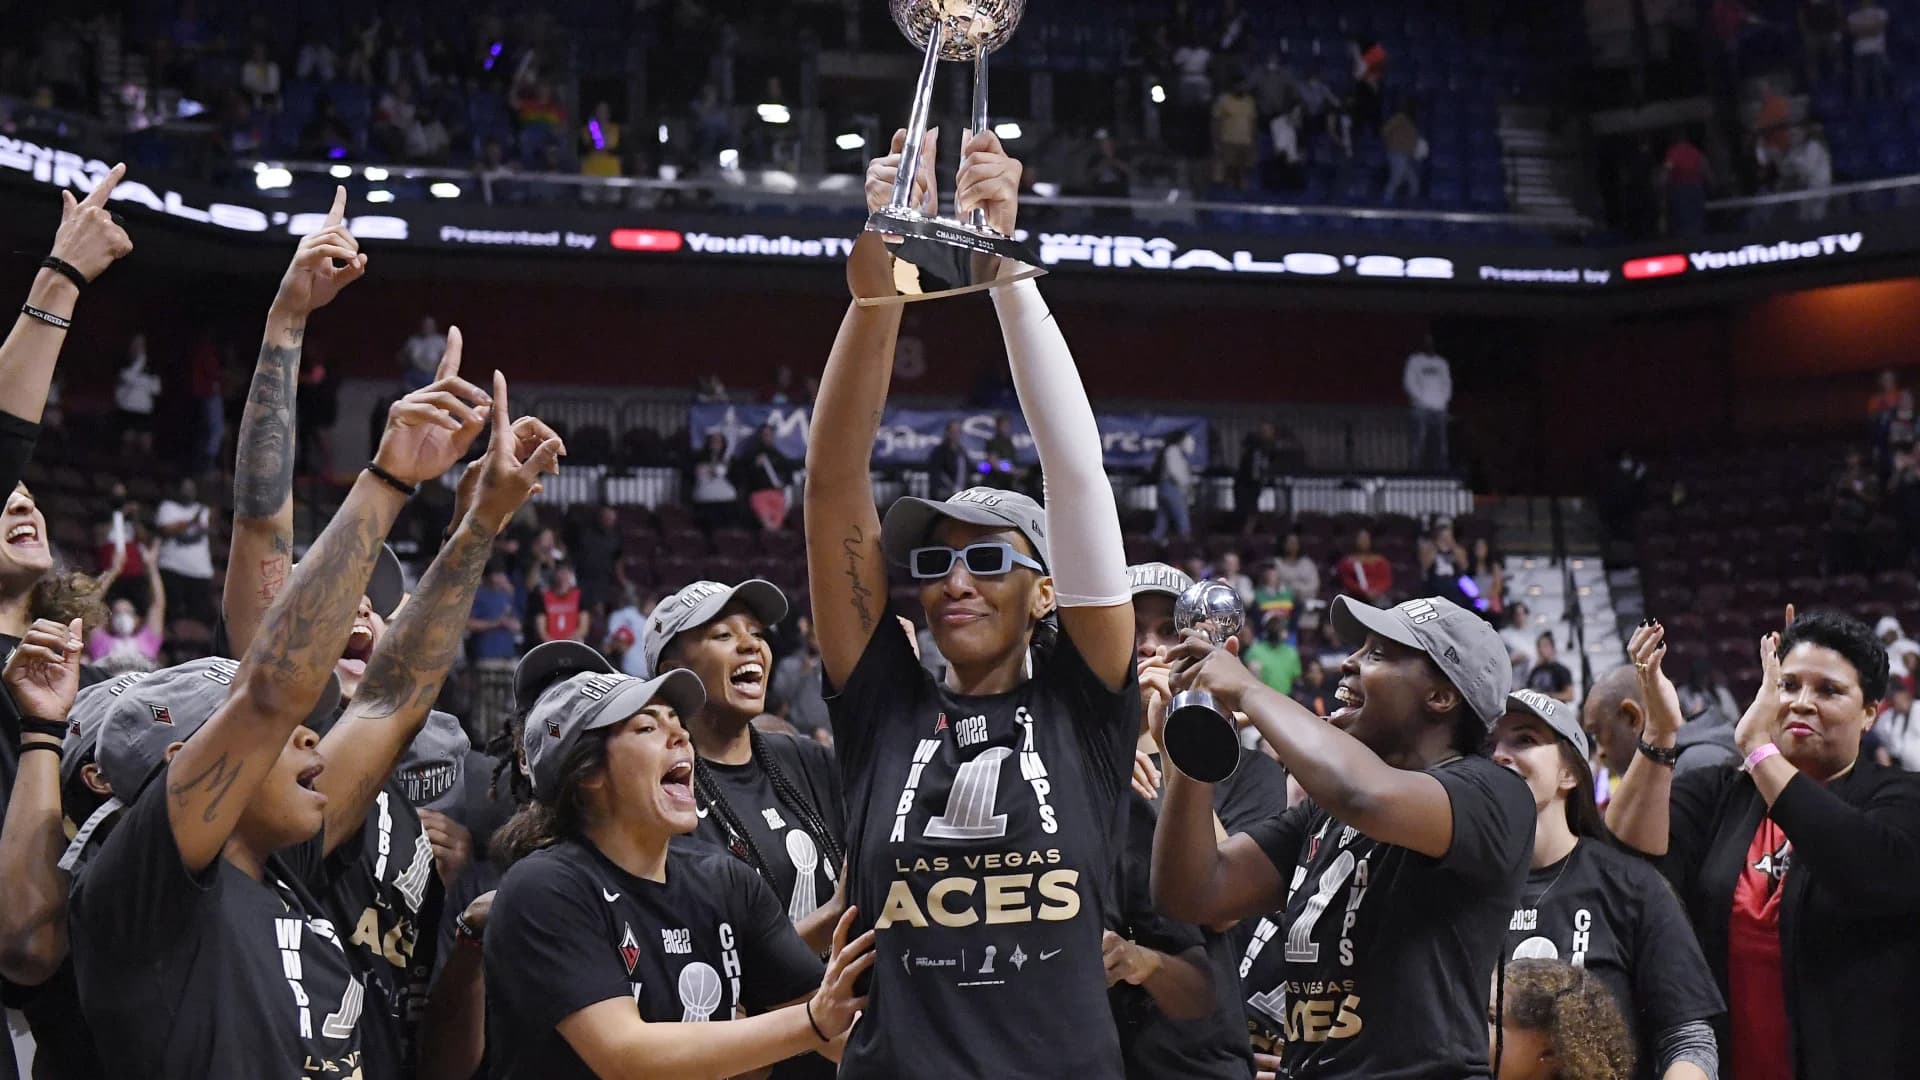 Las Vegas Aces beat Connecticut Sun to win first WNBA title